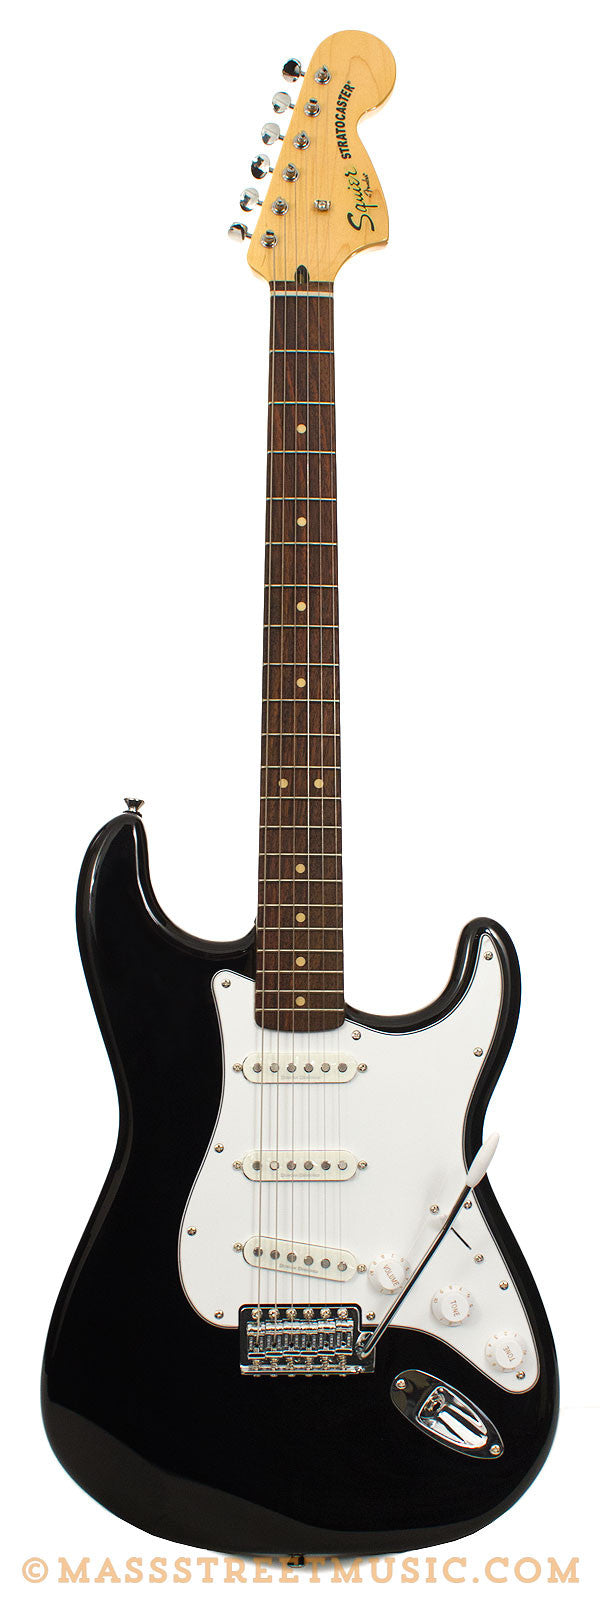 Squier - Vintage Modified Stratocaster - Black